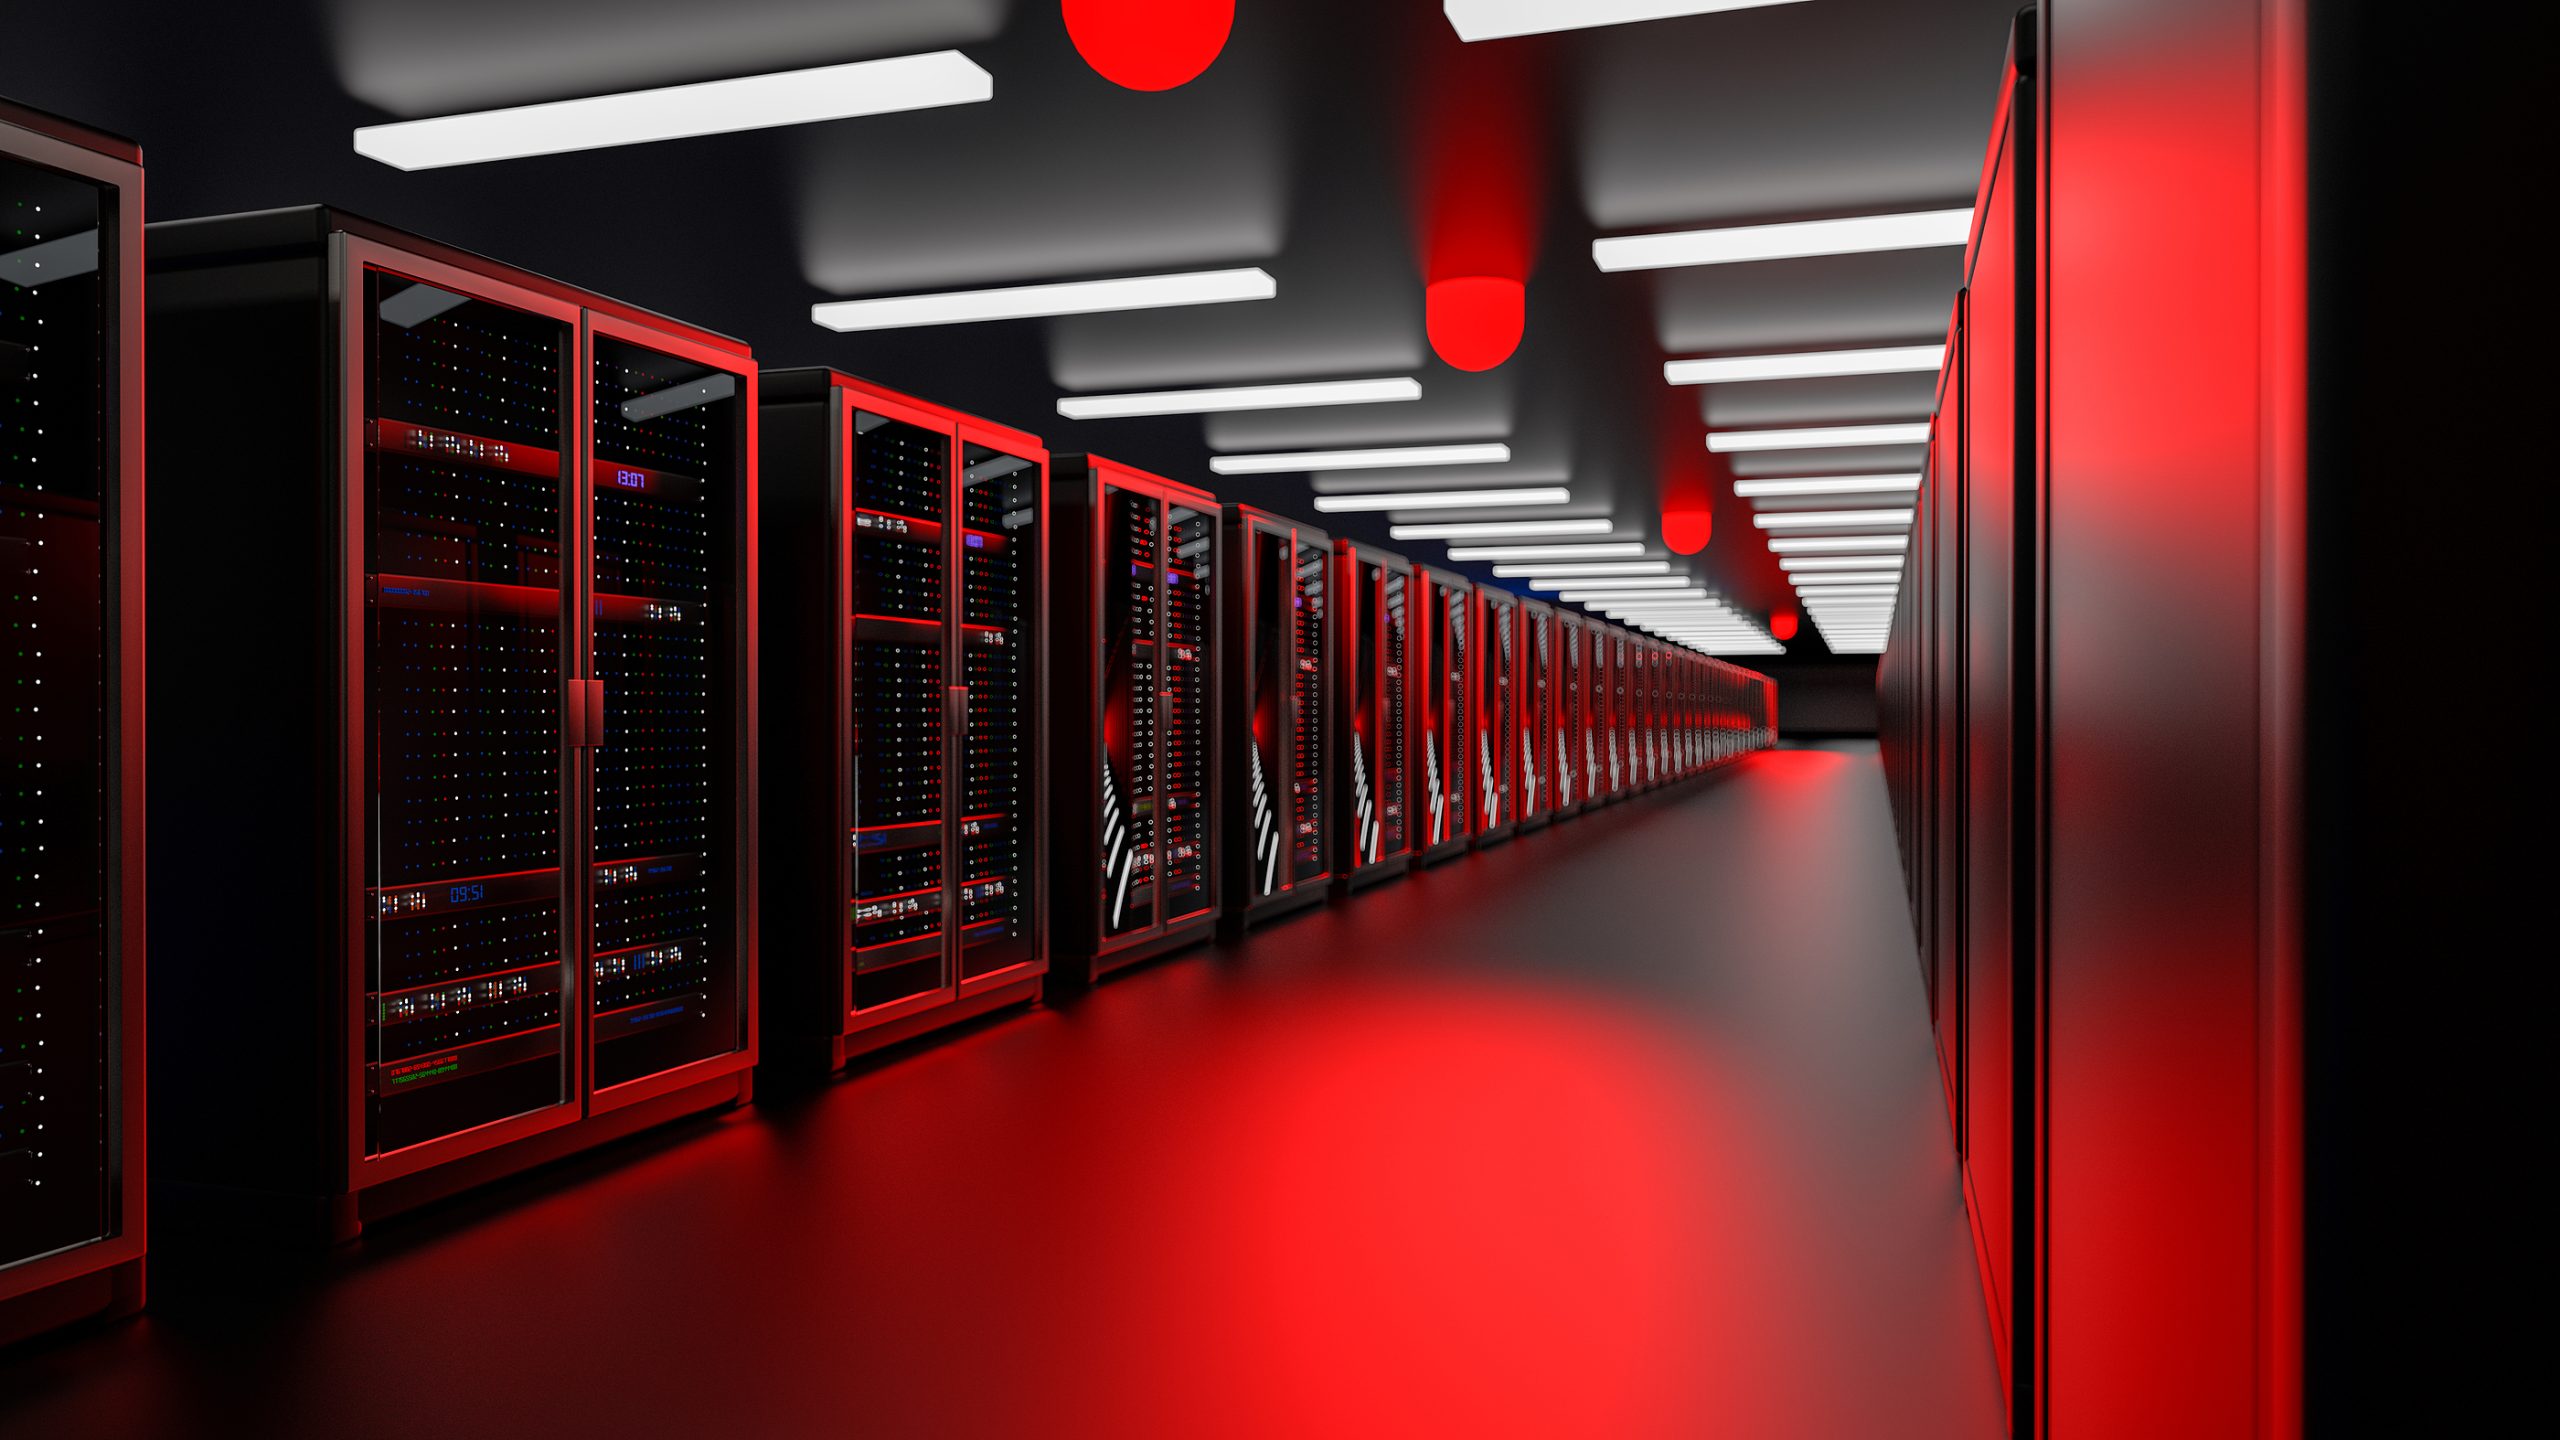 data center failure affecting cloud computing performance